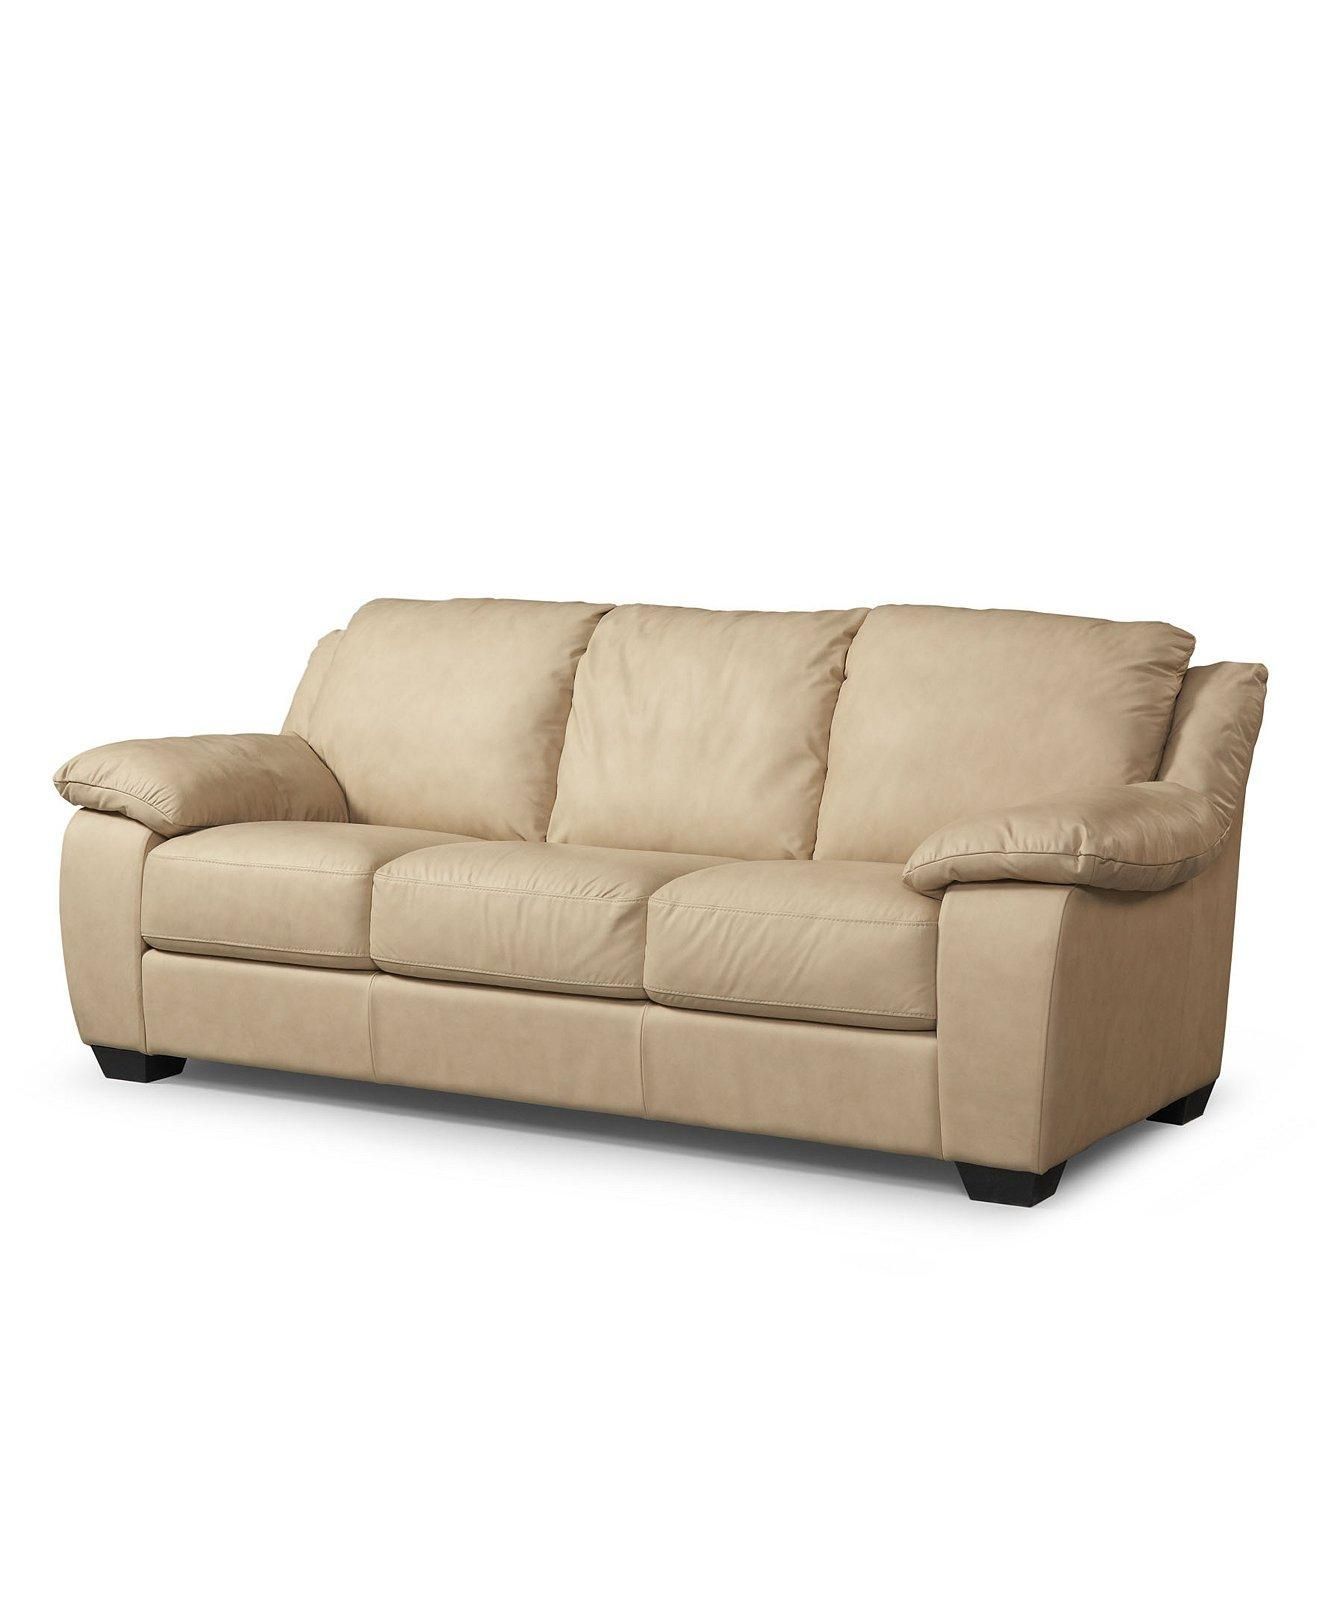 Sofas Center : Myars Leather Sofa Sofas Singular At Macys Photo Regarding Macys Sofas (View 9 of 20)